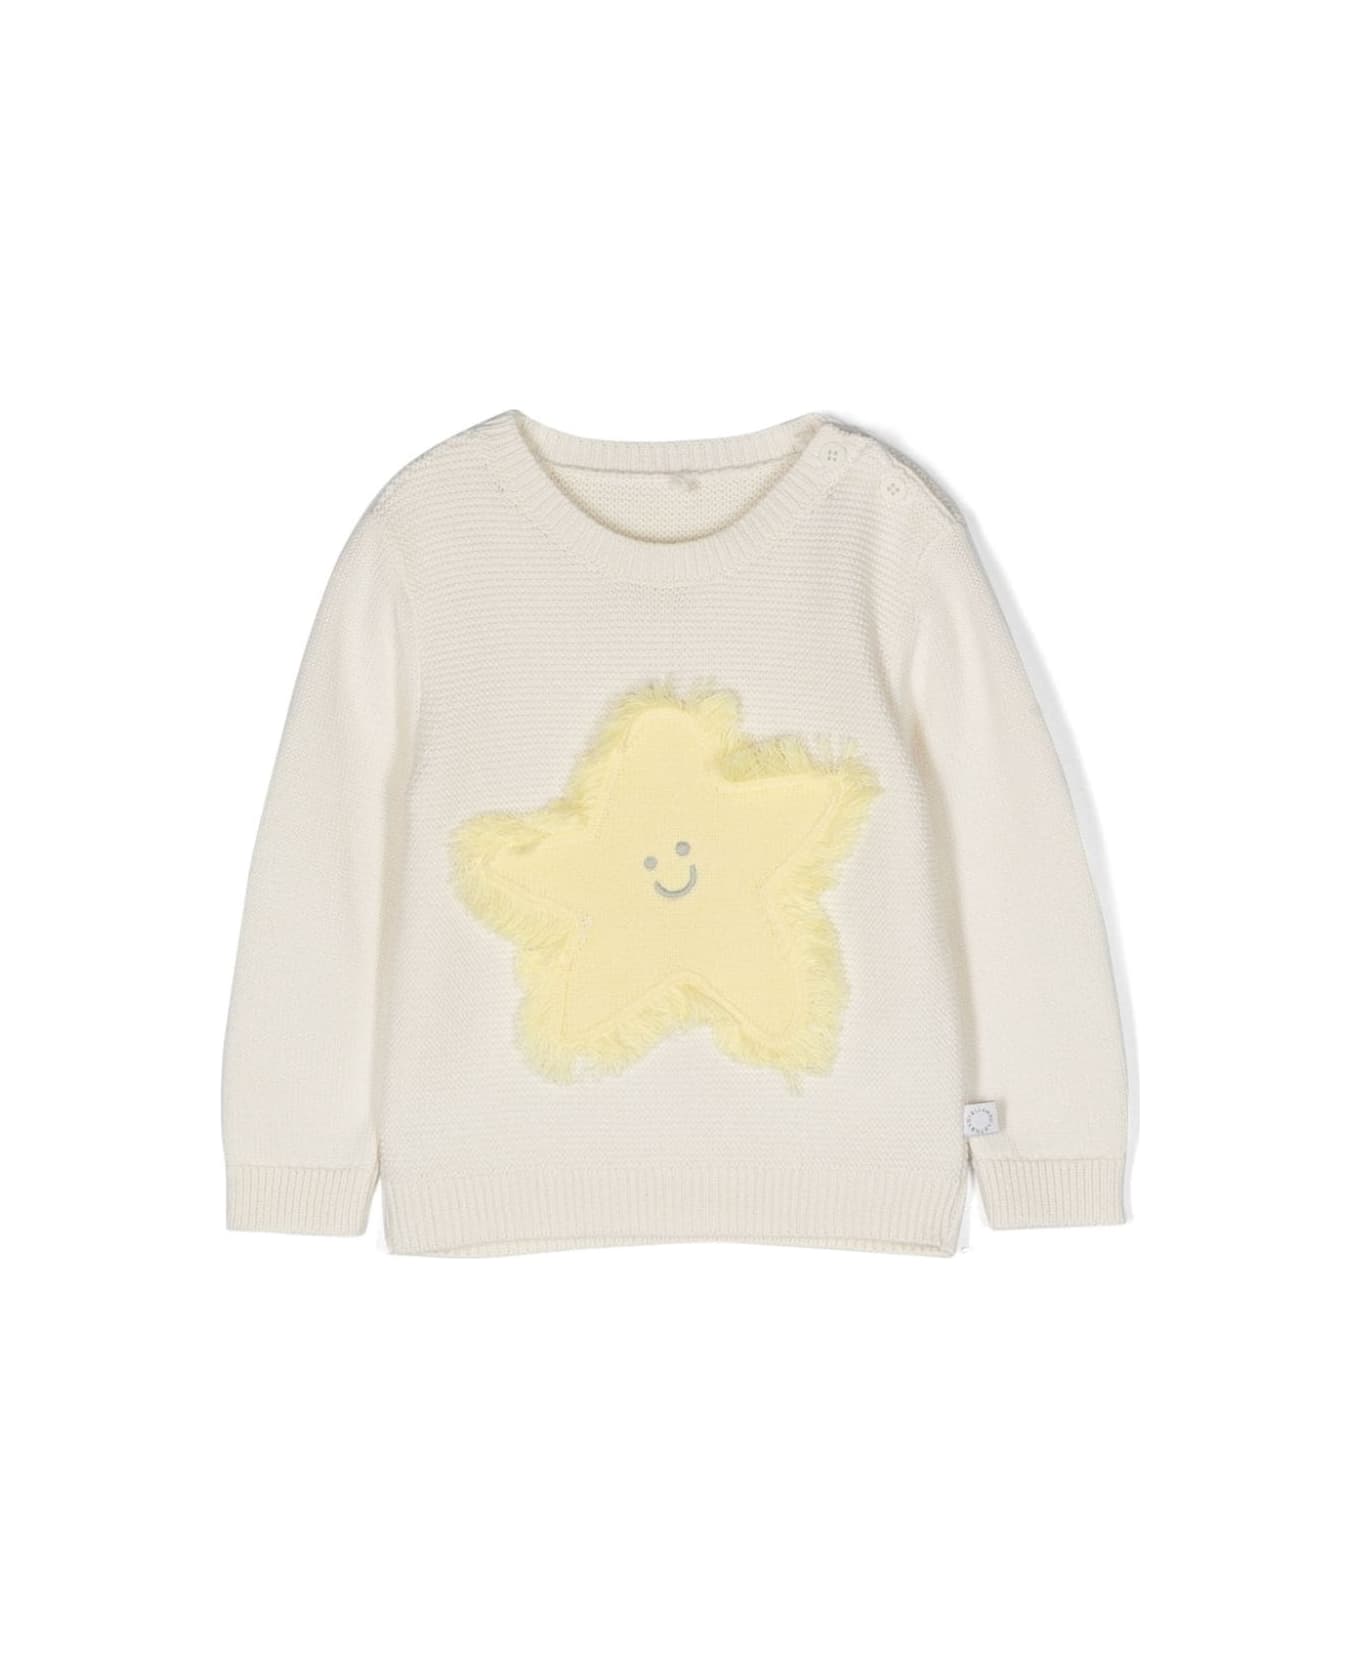 Stella McCartney Kids Sweater With Star - White